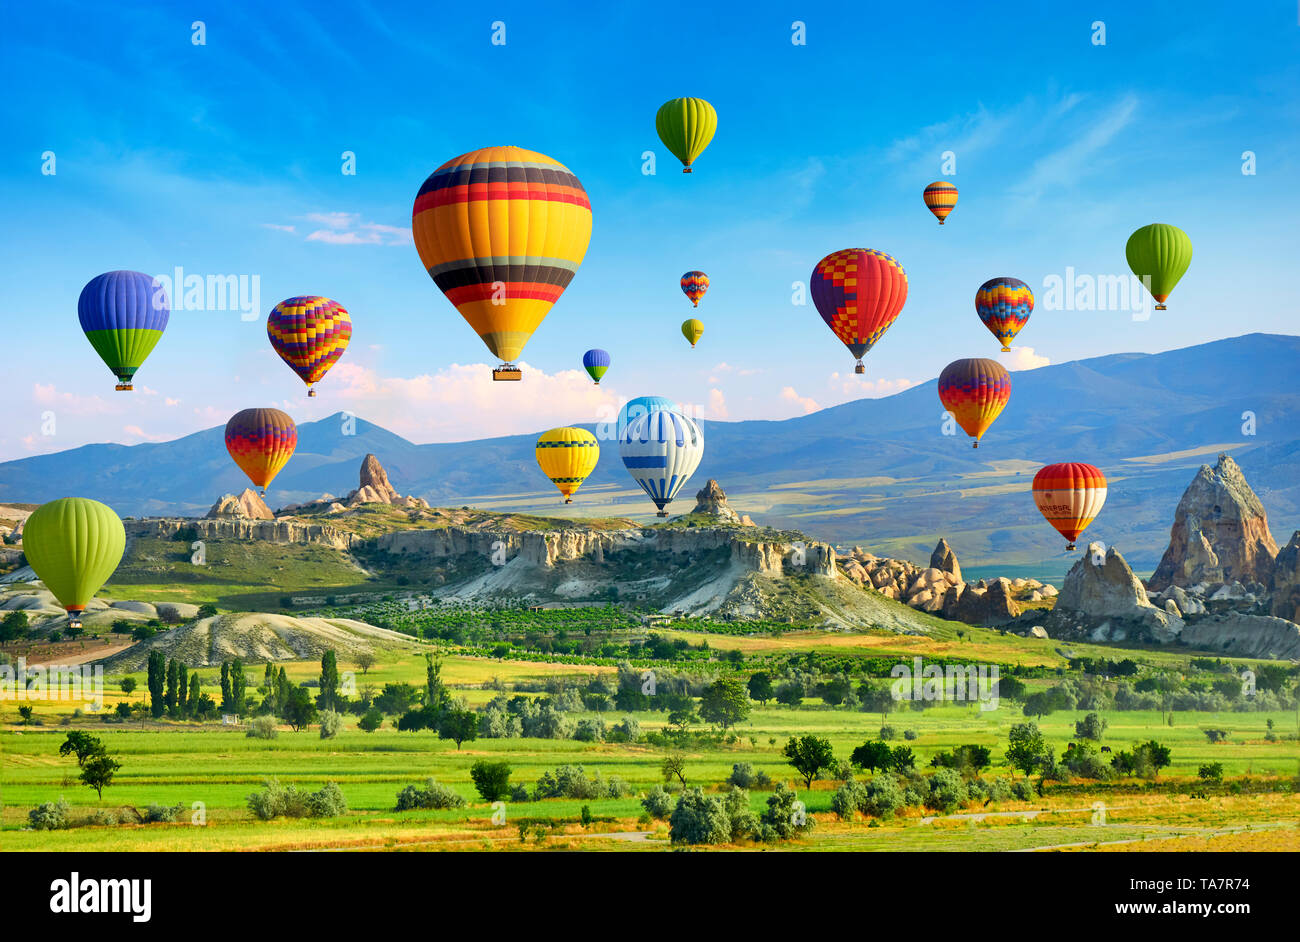 Kappadokien - Ballon fliegen am Himmel, Türkei Stockfotografie - Alamy